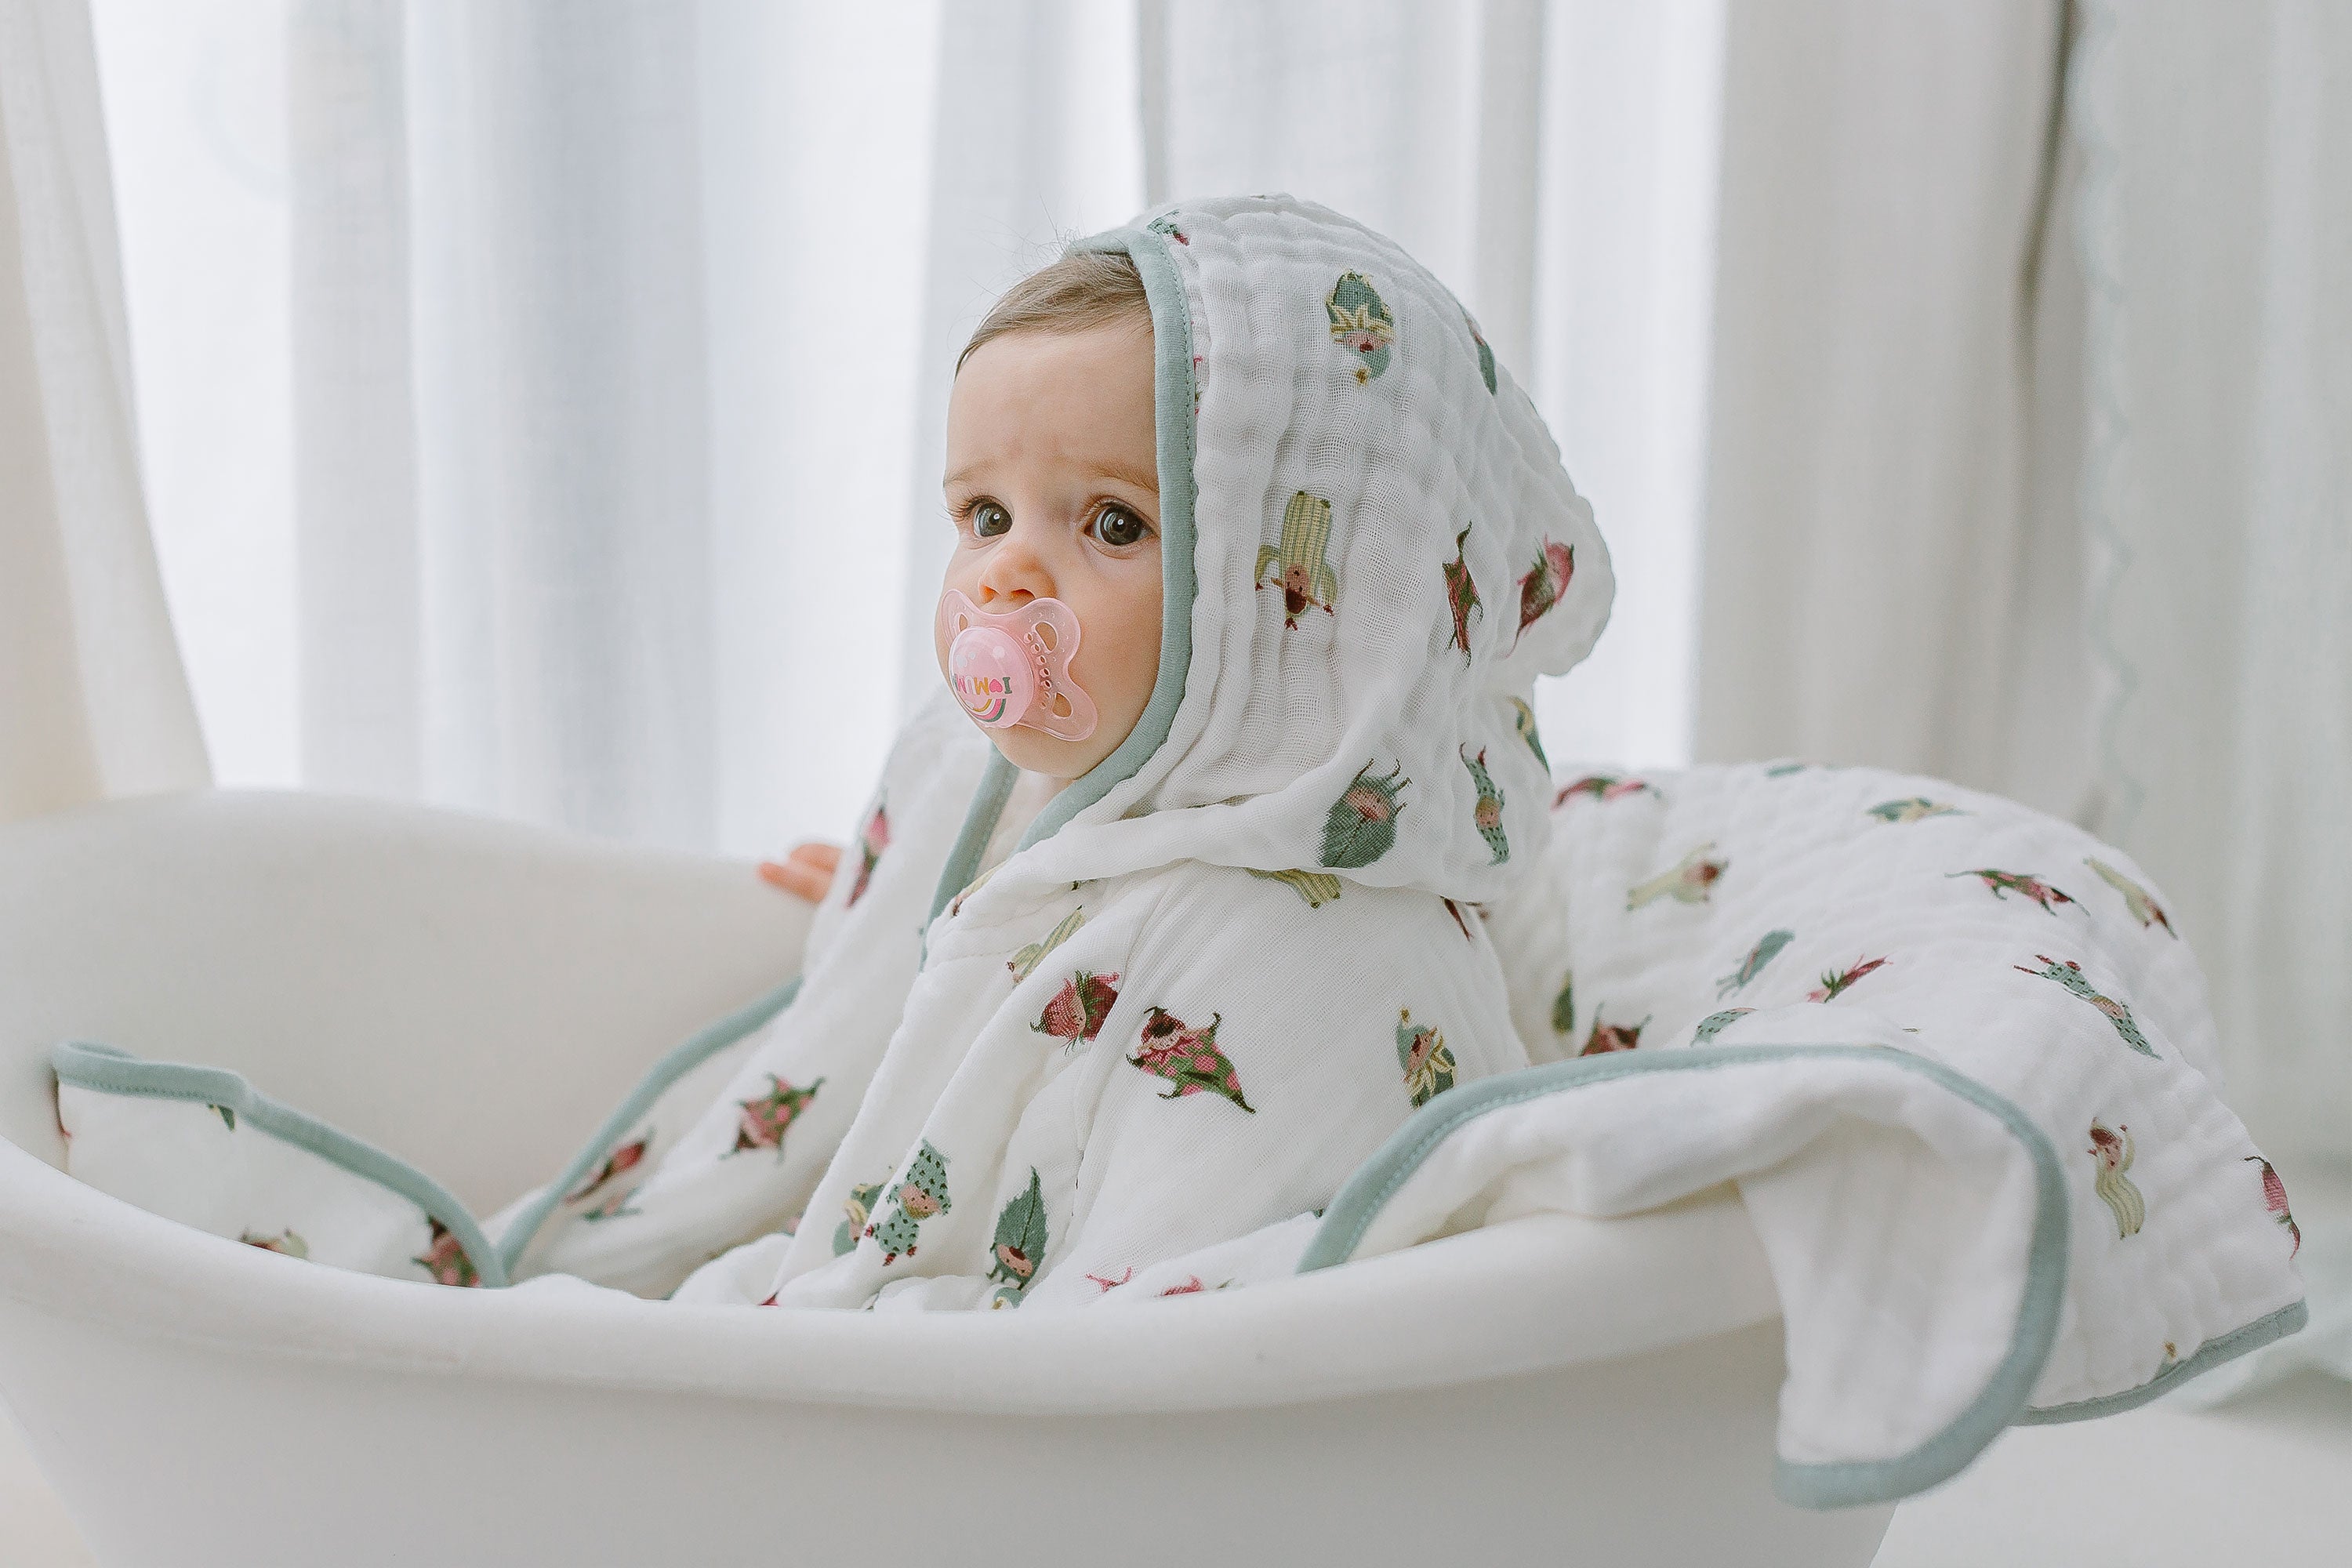 Hooded Baby Bath Cloak (Organic Cotton) - Pixie Dust